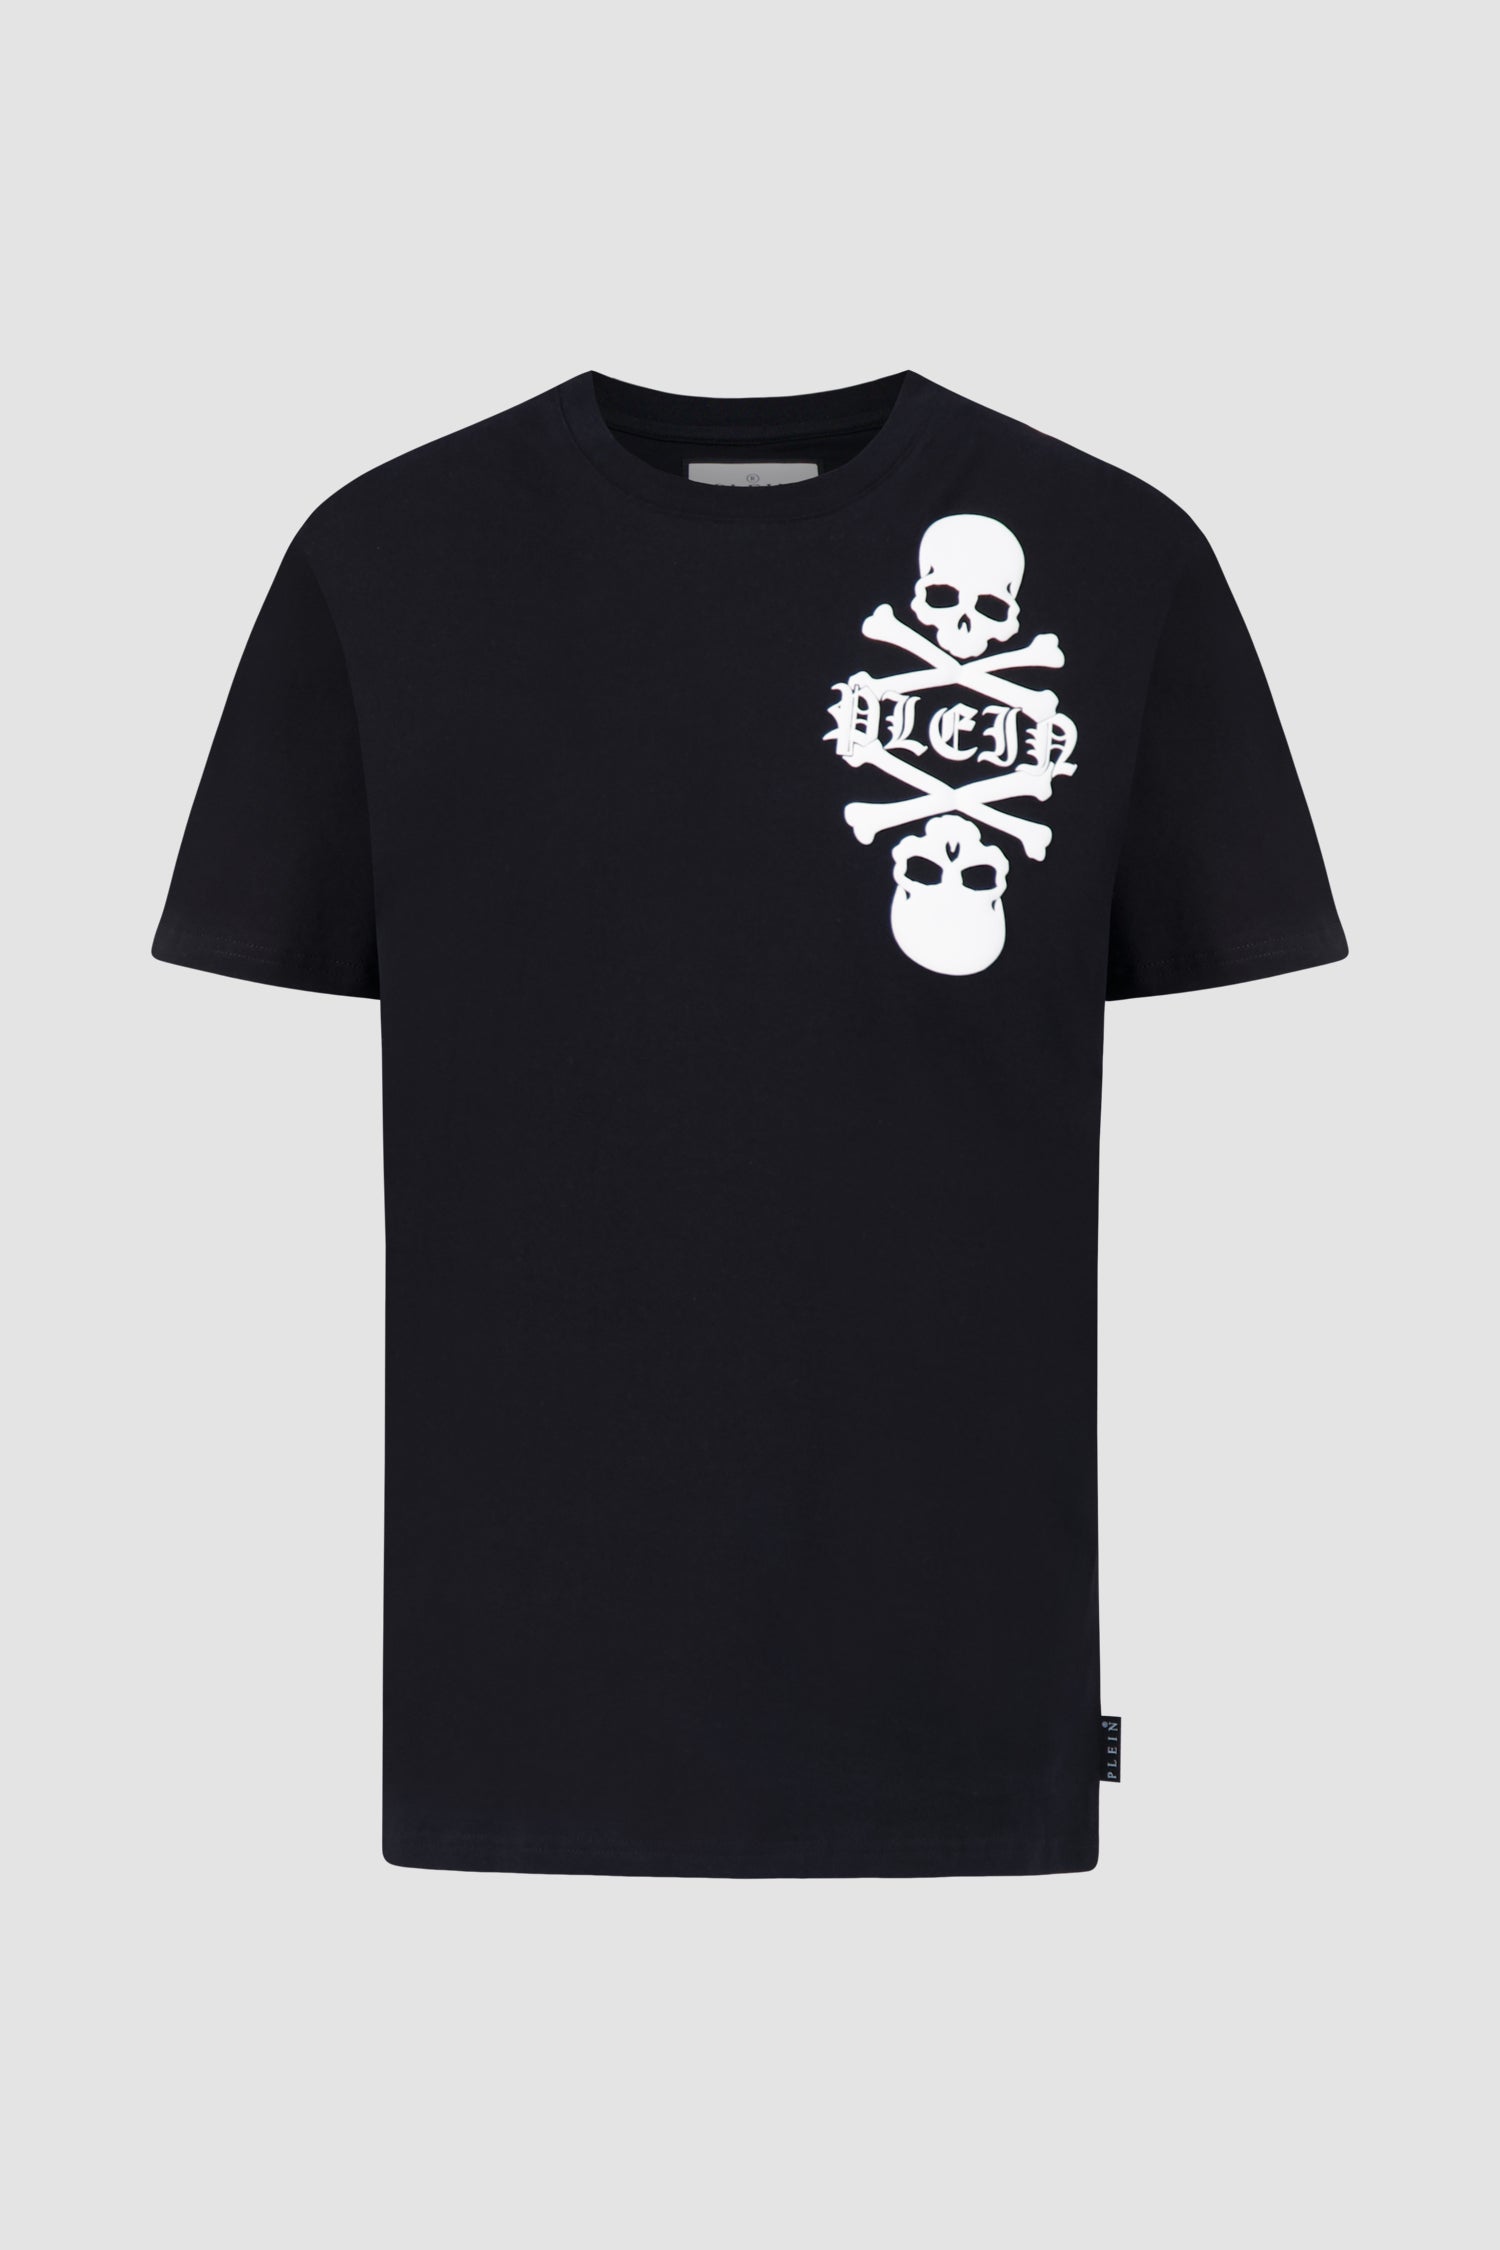 Philipp Plein Black Round Neck SS Skull&Bones T-Shirt